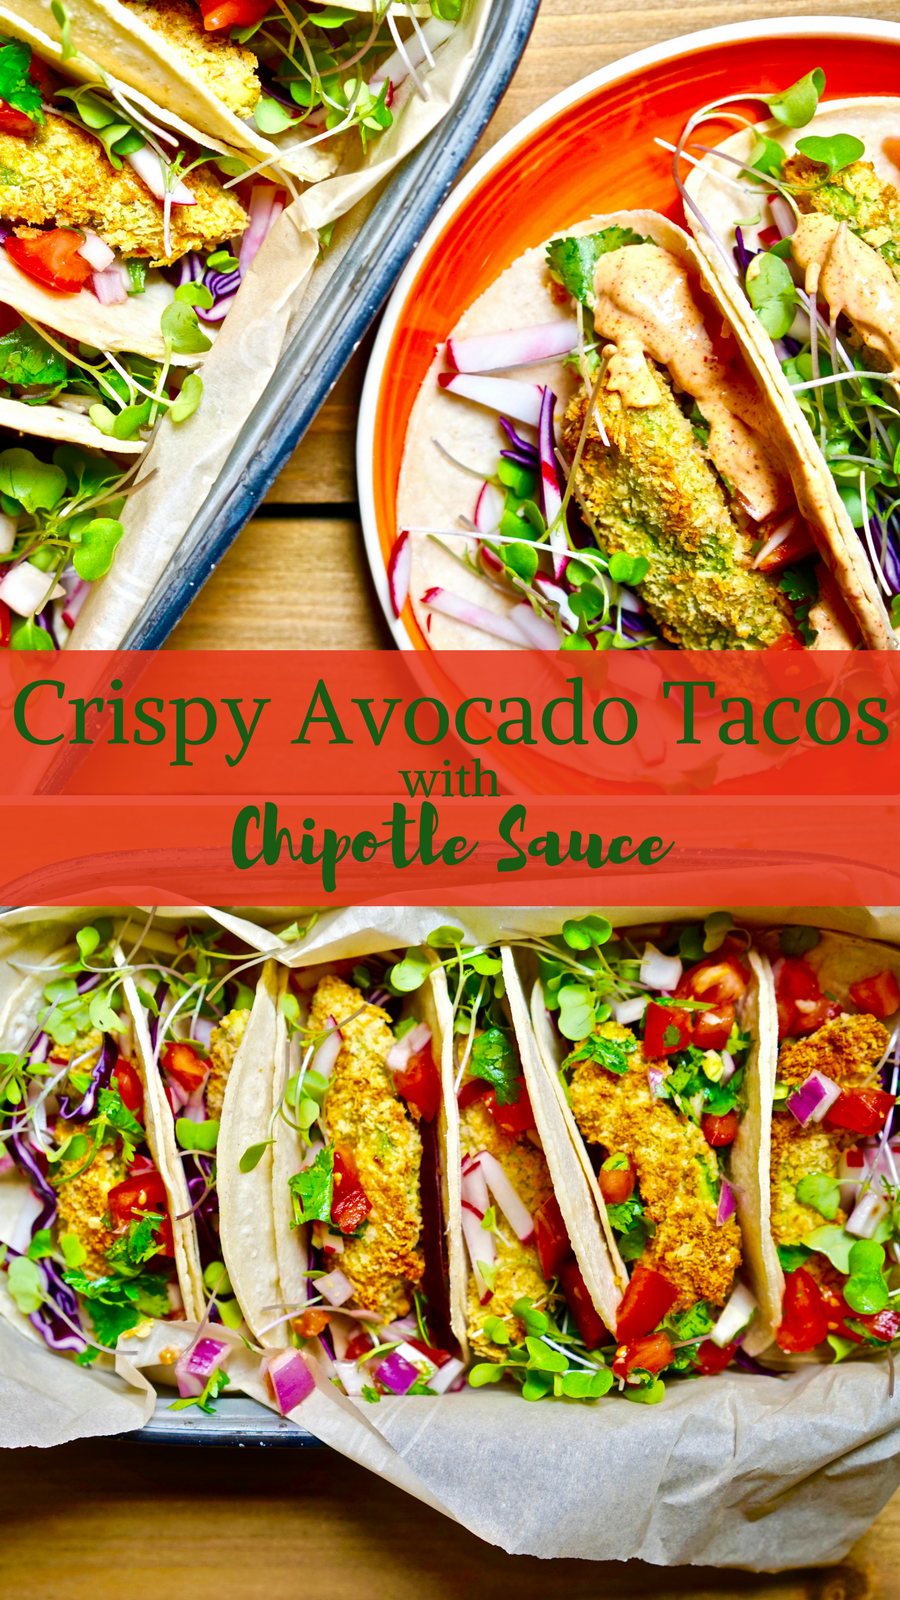 Crispy Avocado Tacos with Chipotle Sauce